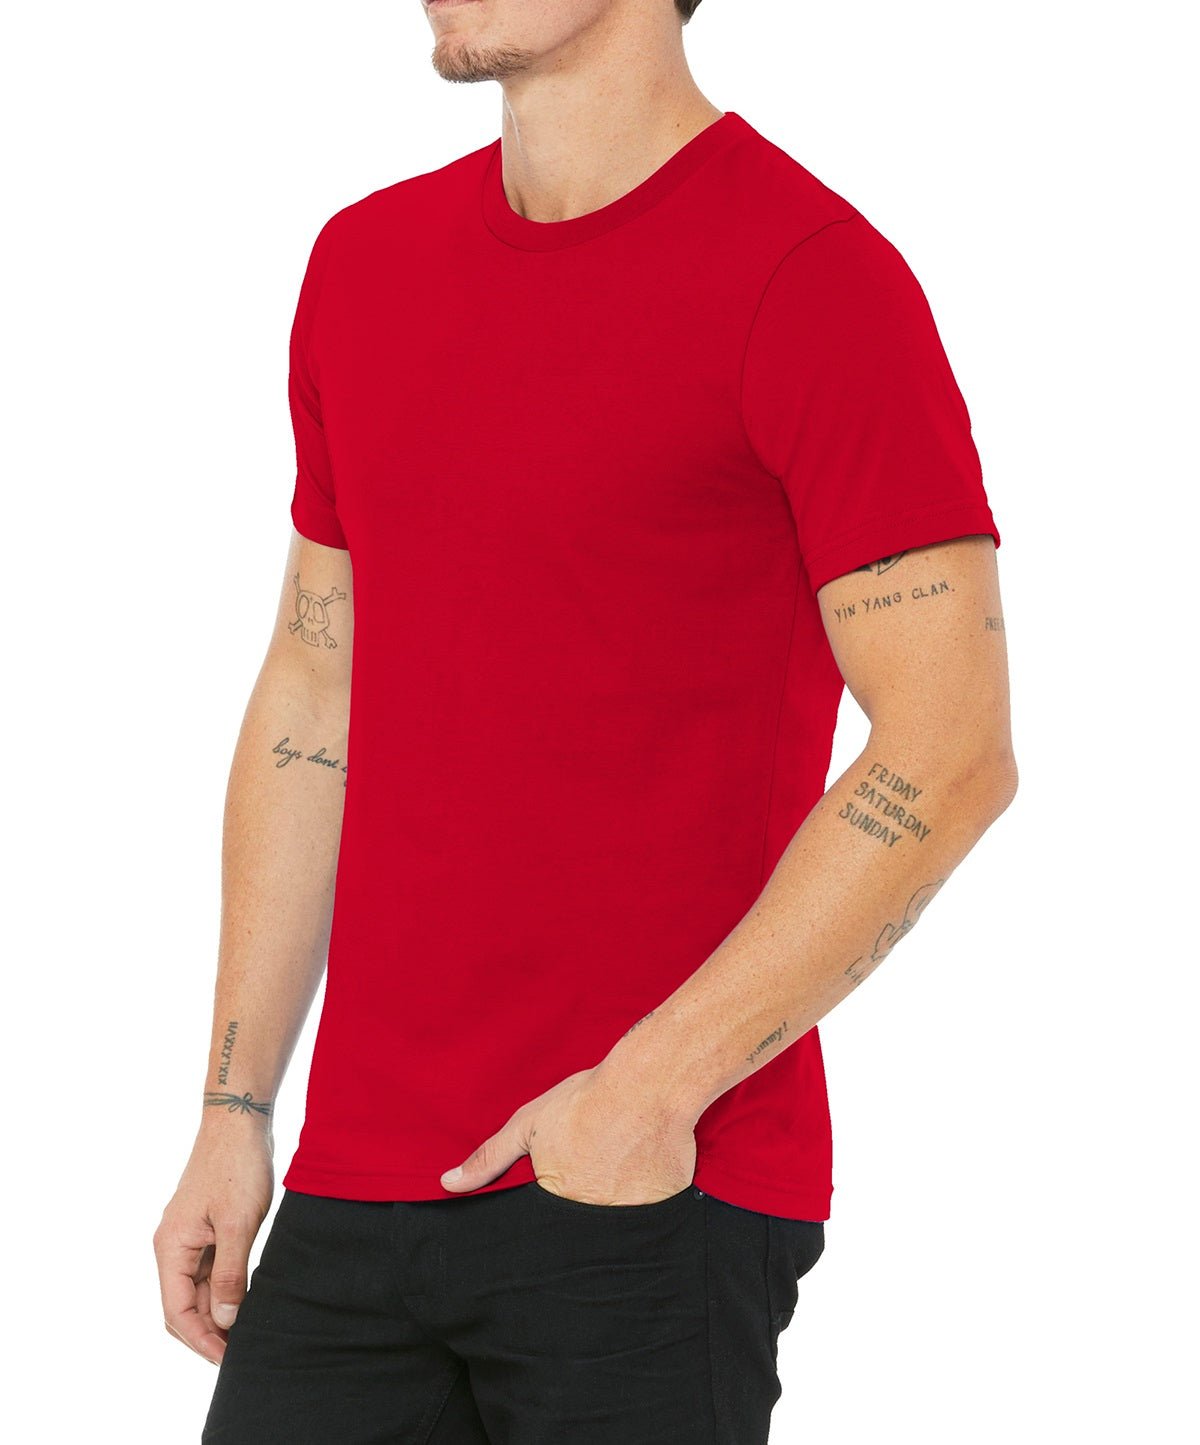 BELLA+CANVAS® Camiseta unisex fabricada en EE. UU.